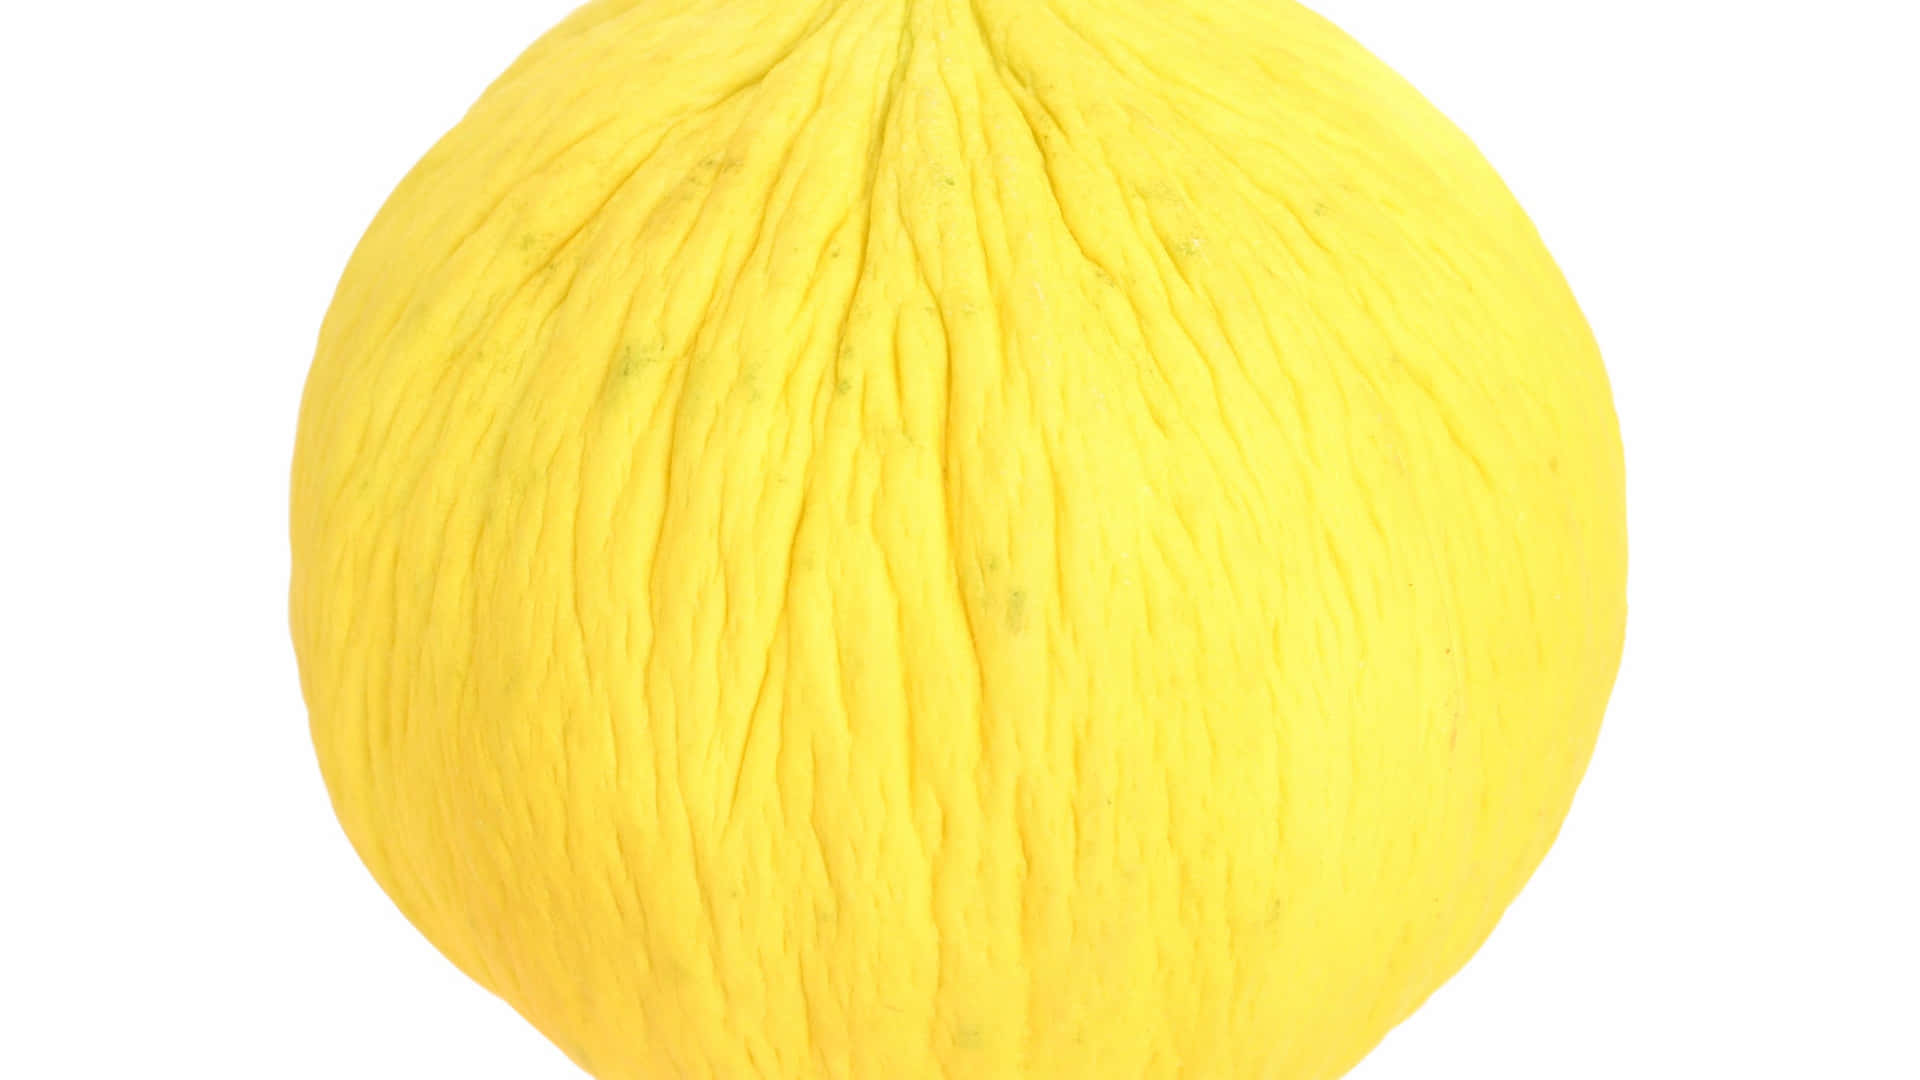 Bright Yellow Casaba Melon Extreme Close Up Shot Wallpaper